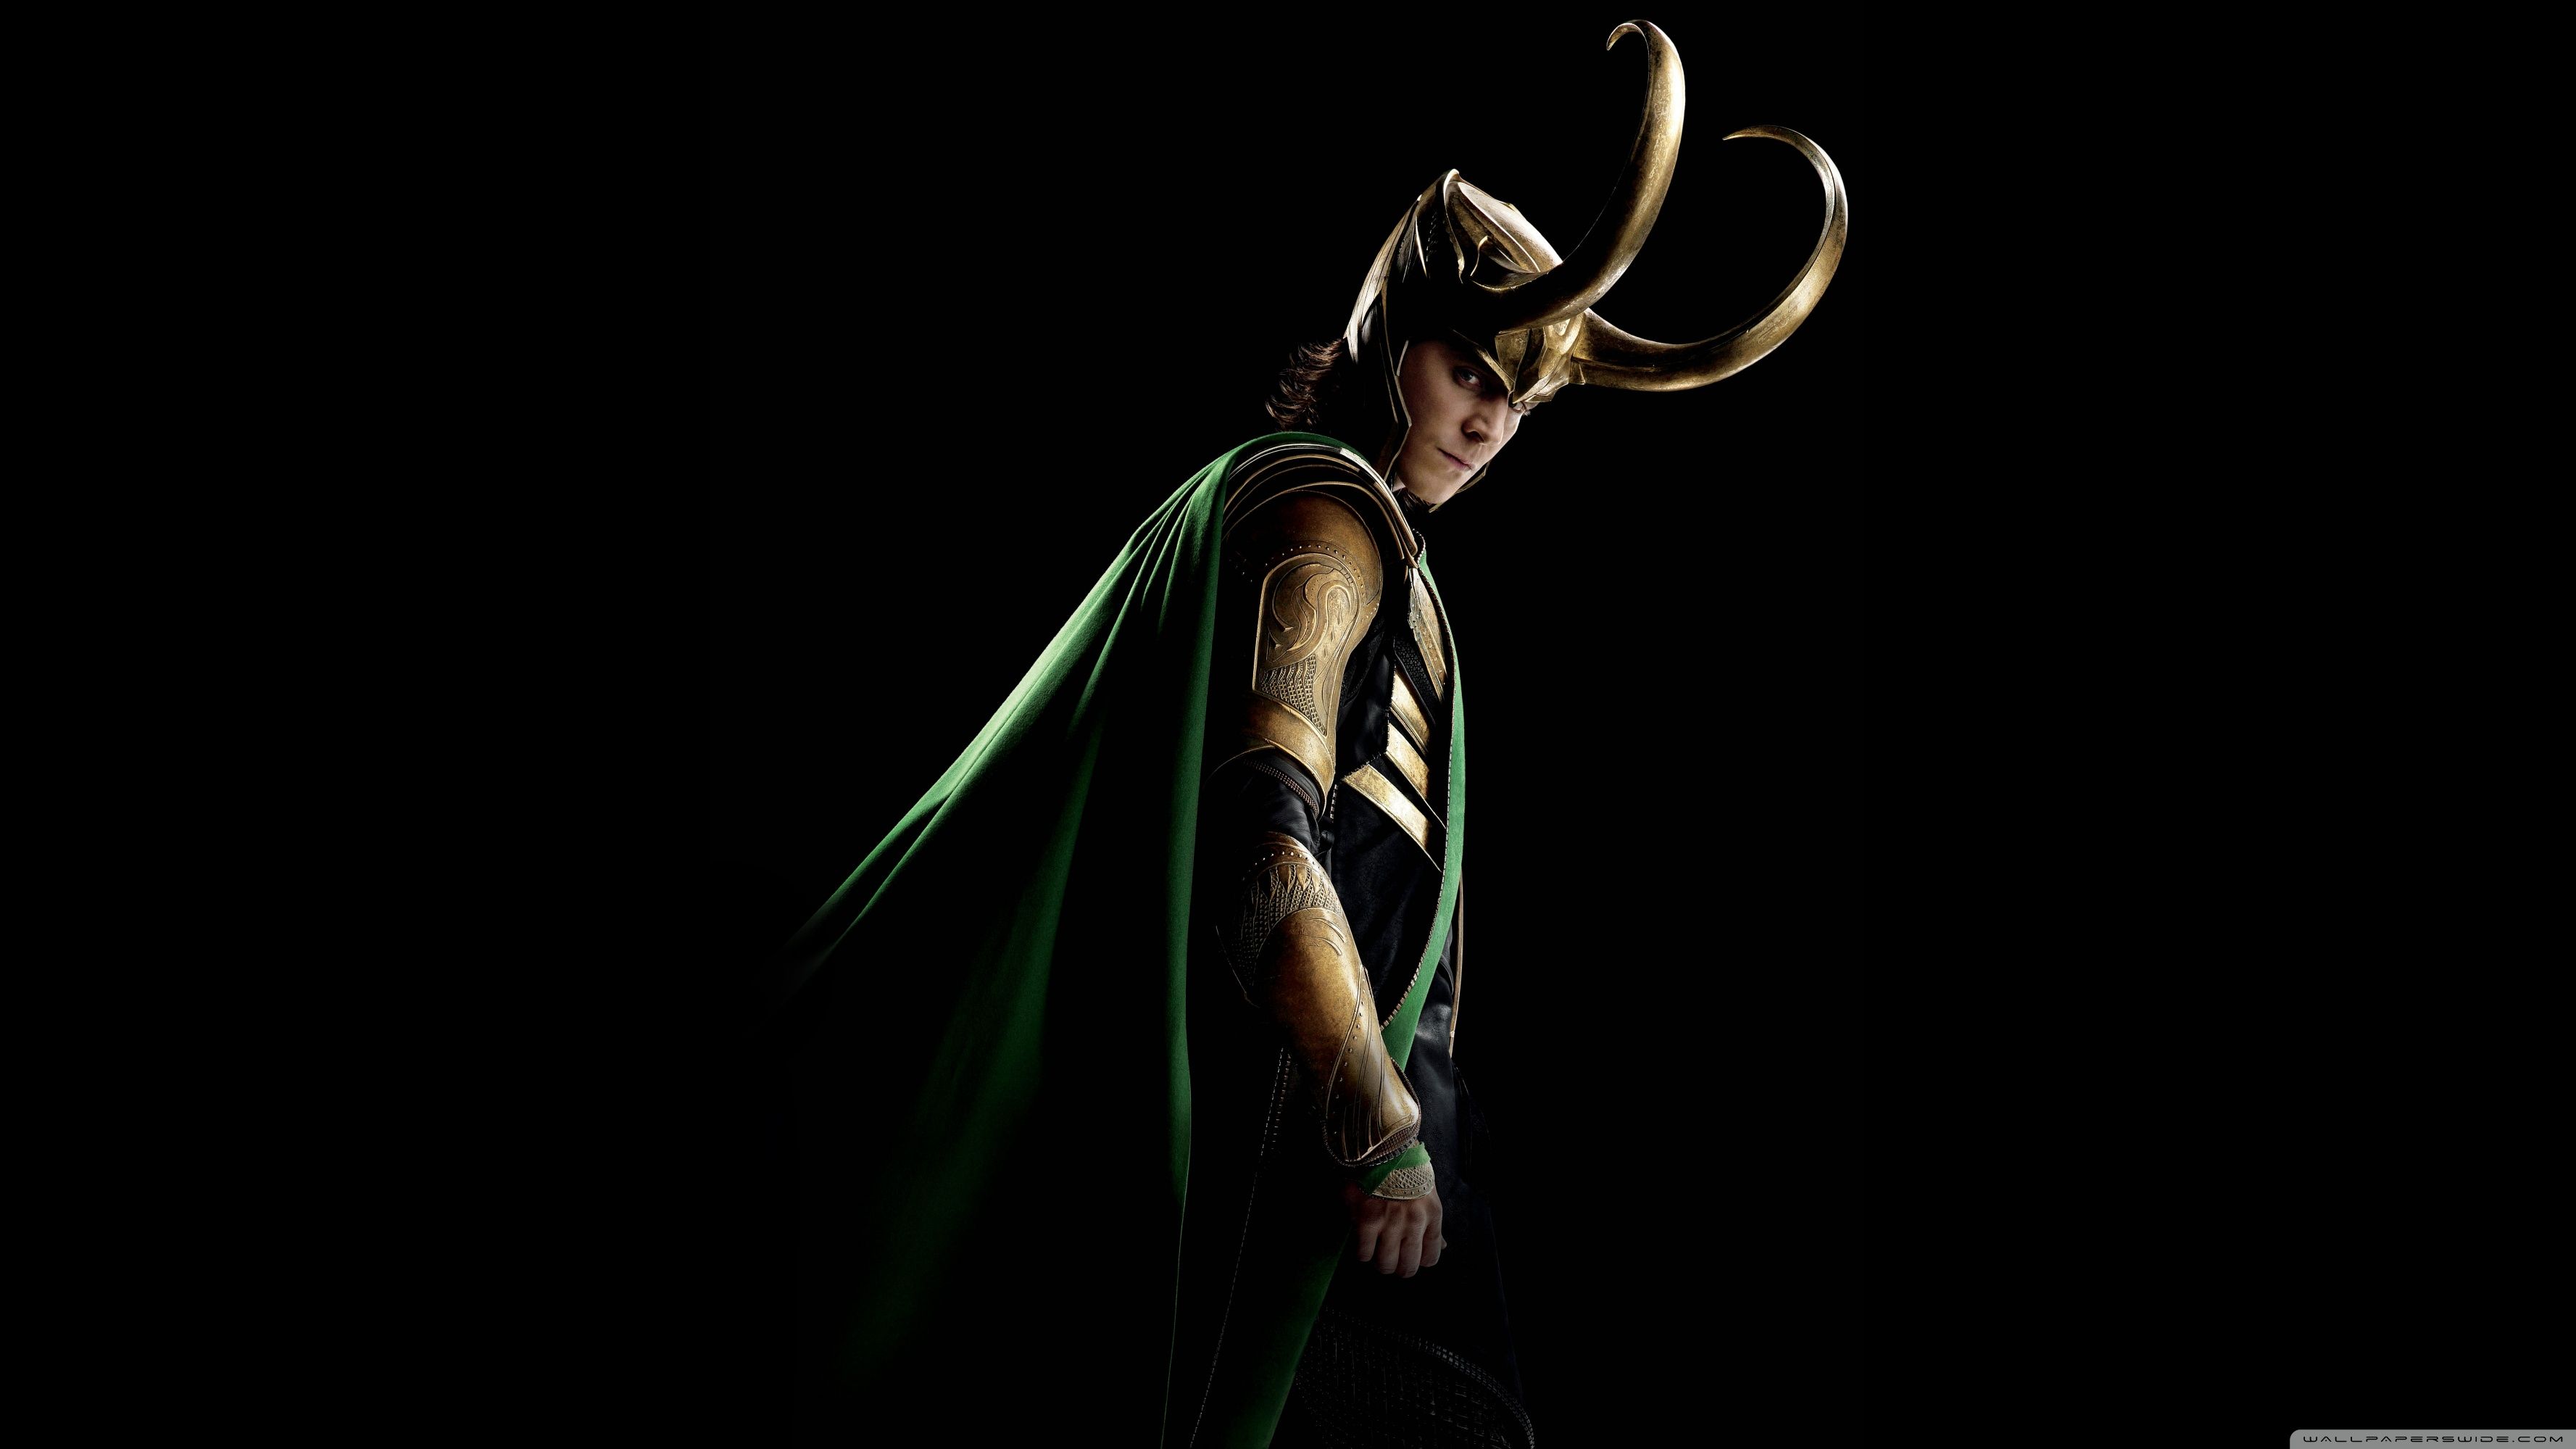 Thor The Dark World Tom Hiddleston as Loki Ultra HD Desktop Background Wallpaper for 4K UHD TV, Widescreen & UltraWide Desktop & Laptop, Tablet